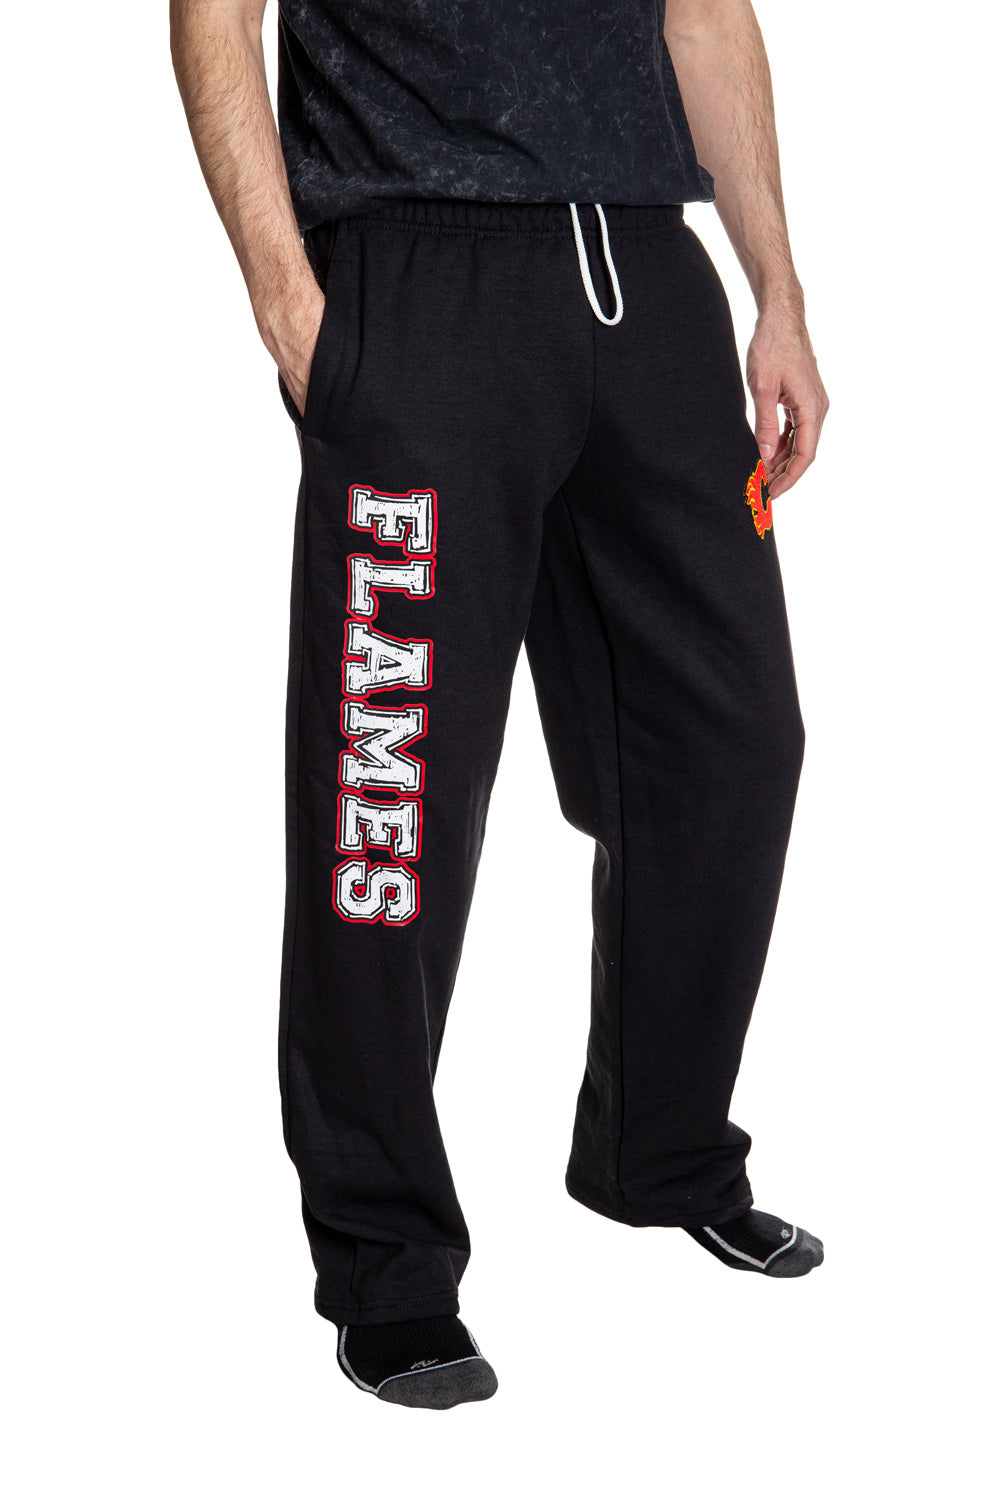 Calgary Flames Premium Fleece Sweatpants